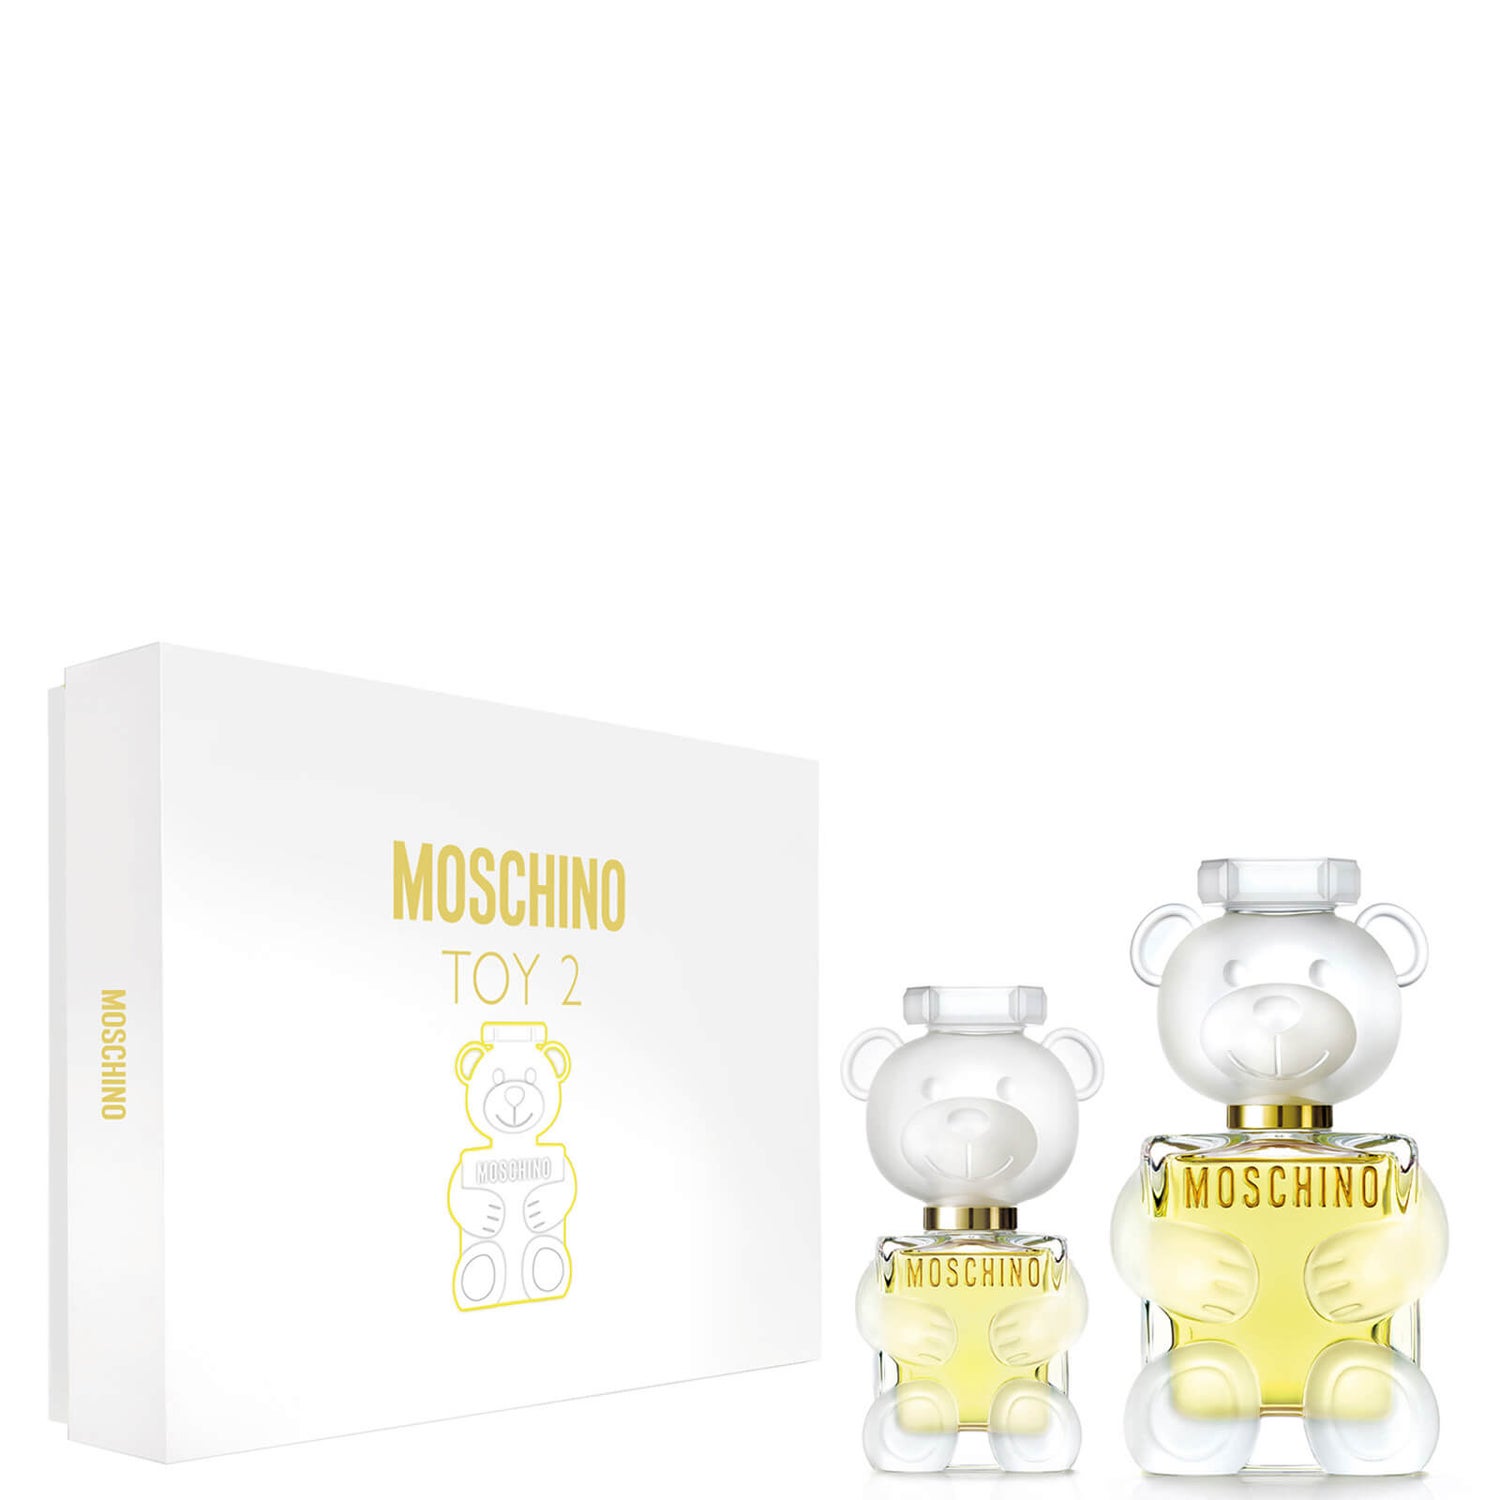 Moschino Toy 2 X20 Eau de Parfum 100ml Set (Worth £130.00)